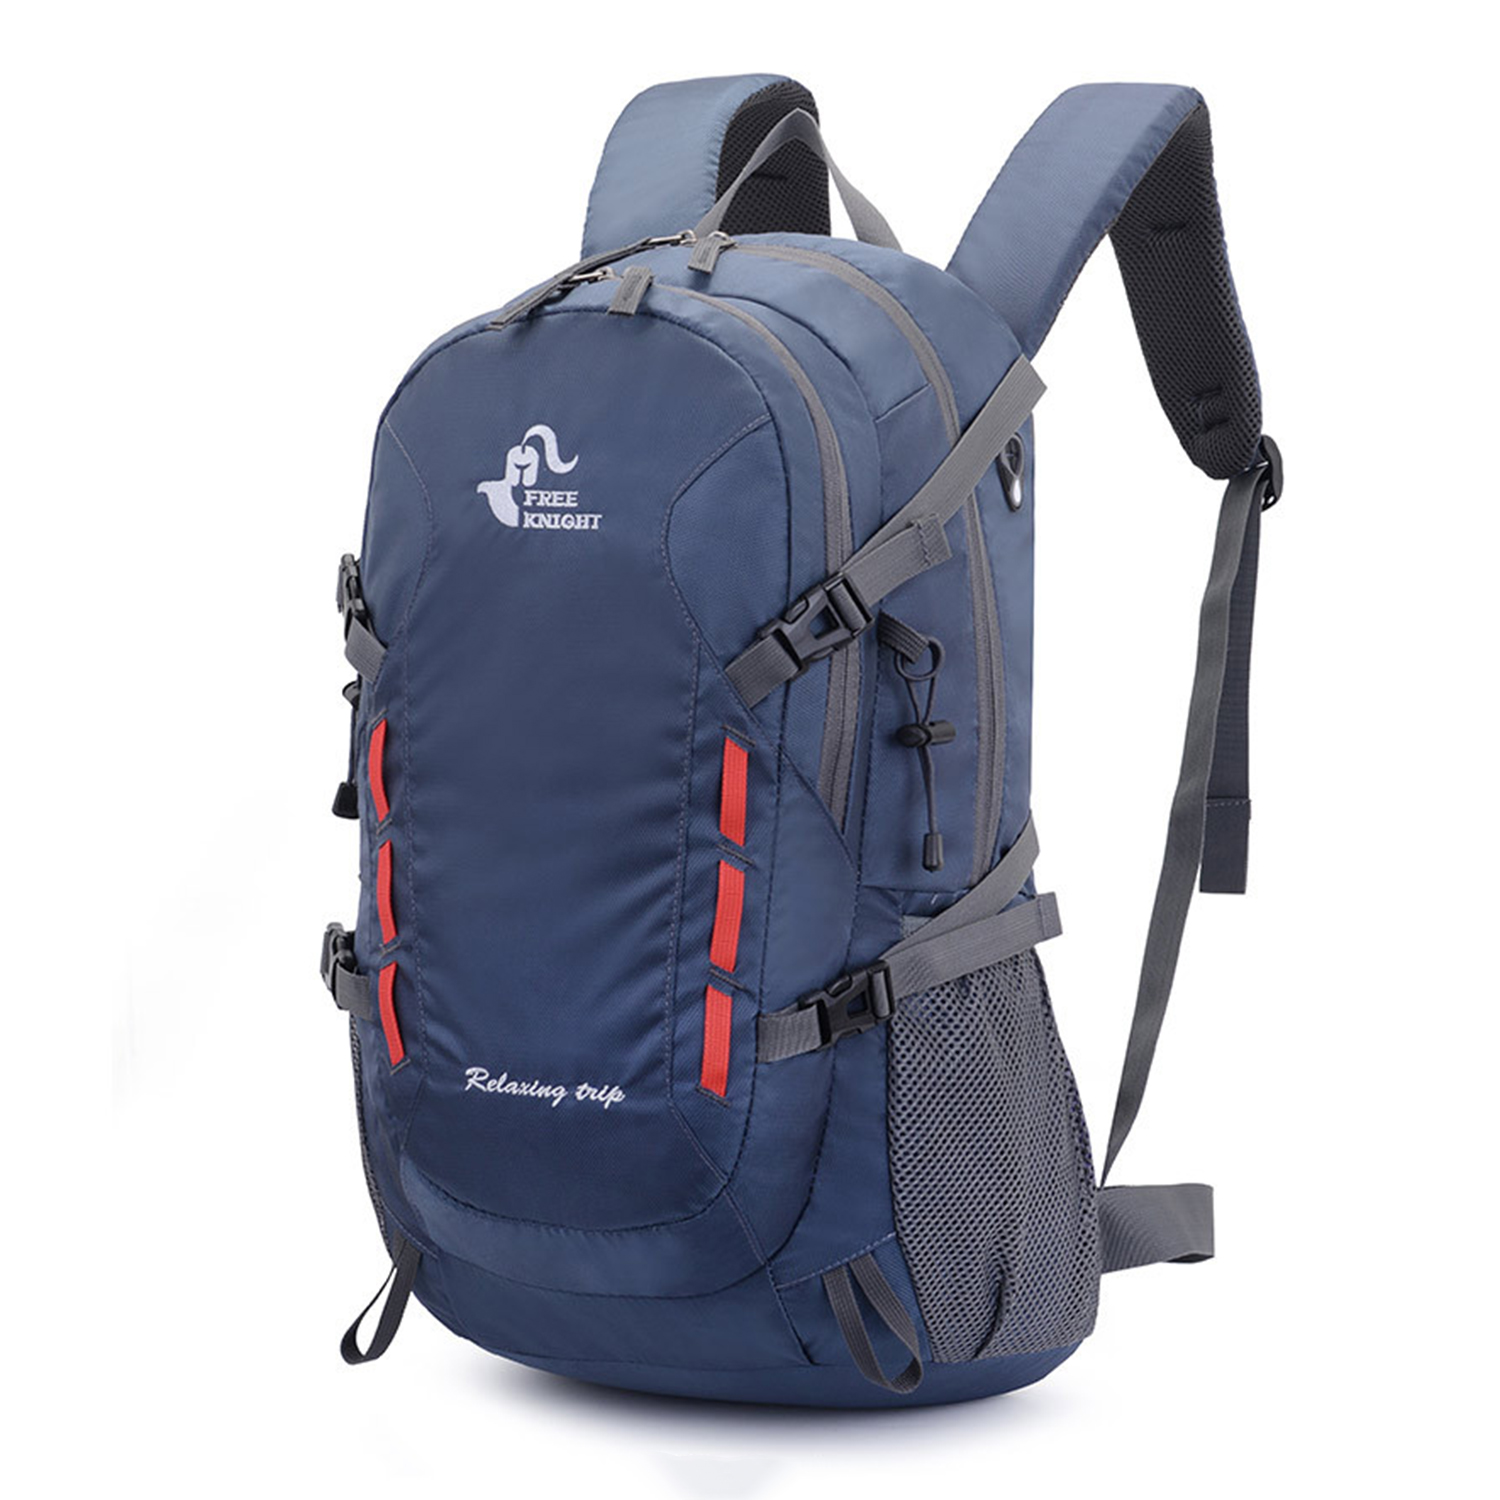 Foldable Backpack 30L,Lightweight Backpacks Waterproof Hiking Backpack Packable Backpack for Women Men Outdoor Hiking(Navy blue) - image 1 of 7